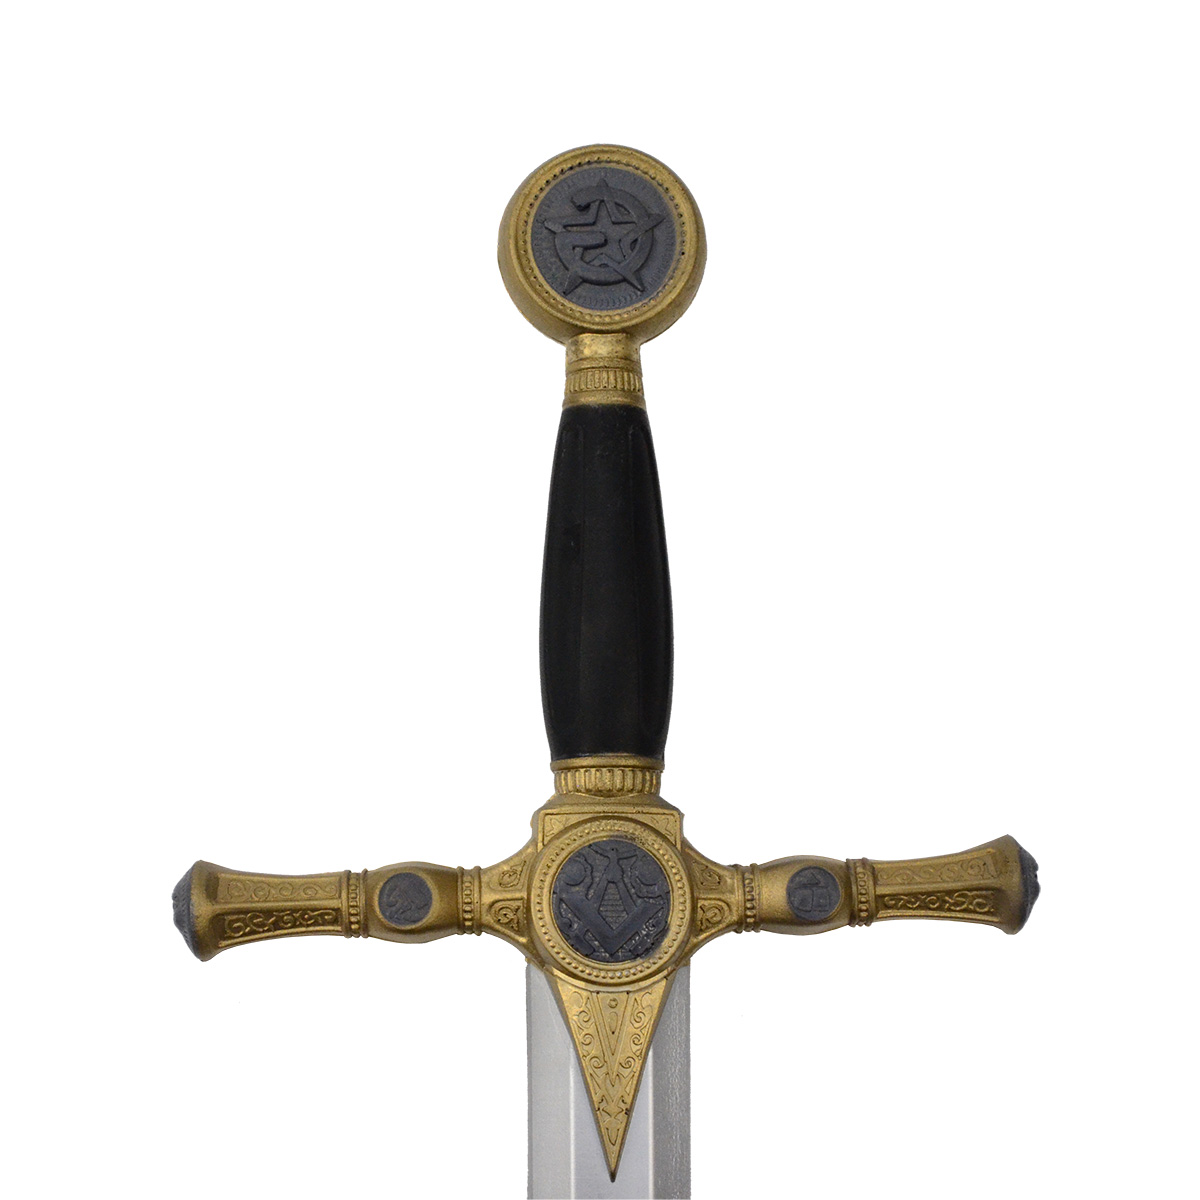 Hero's Edge Foam Masonic Sword, 46" - image 3 of 3